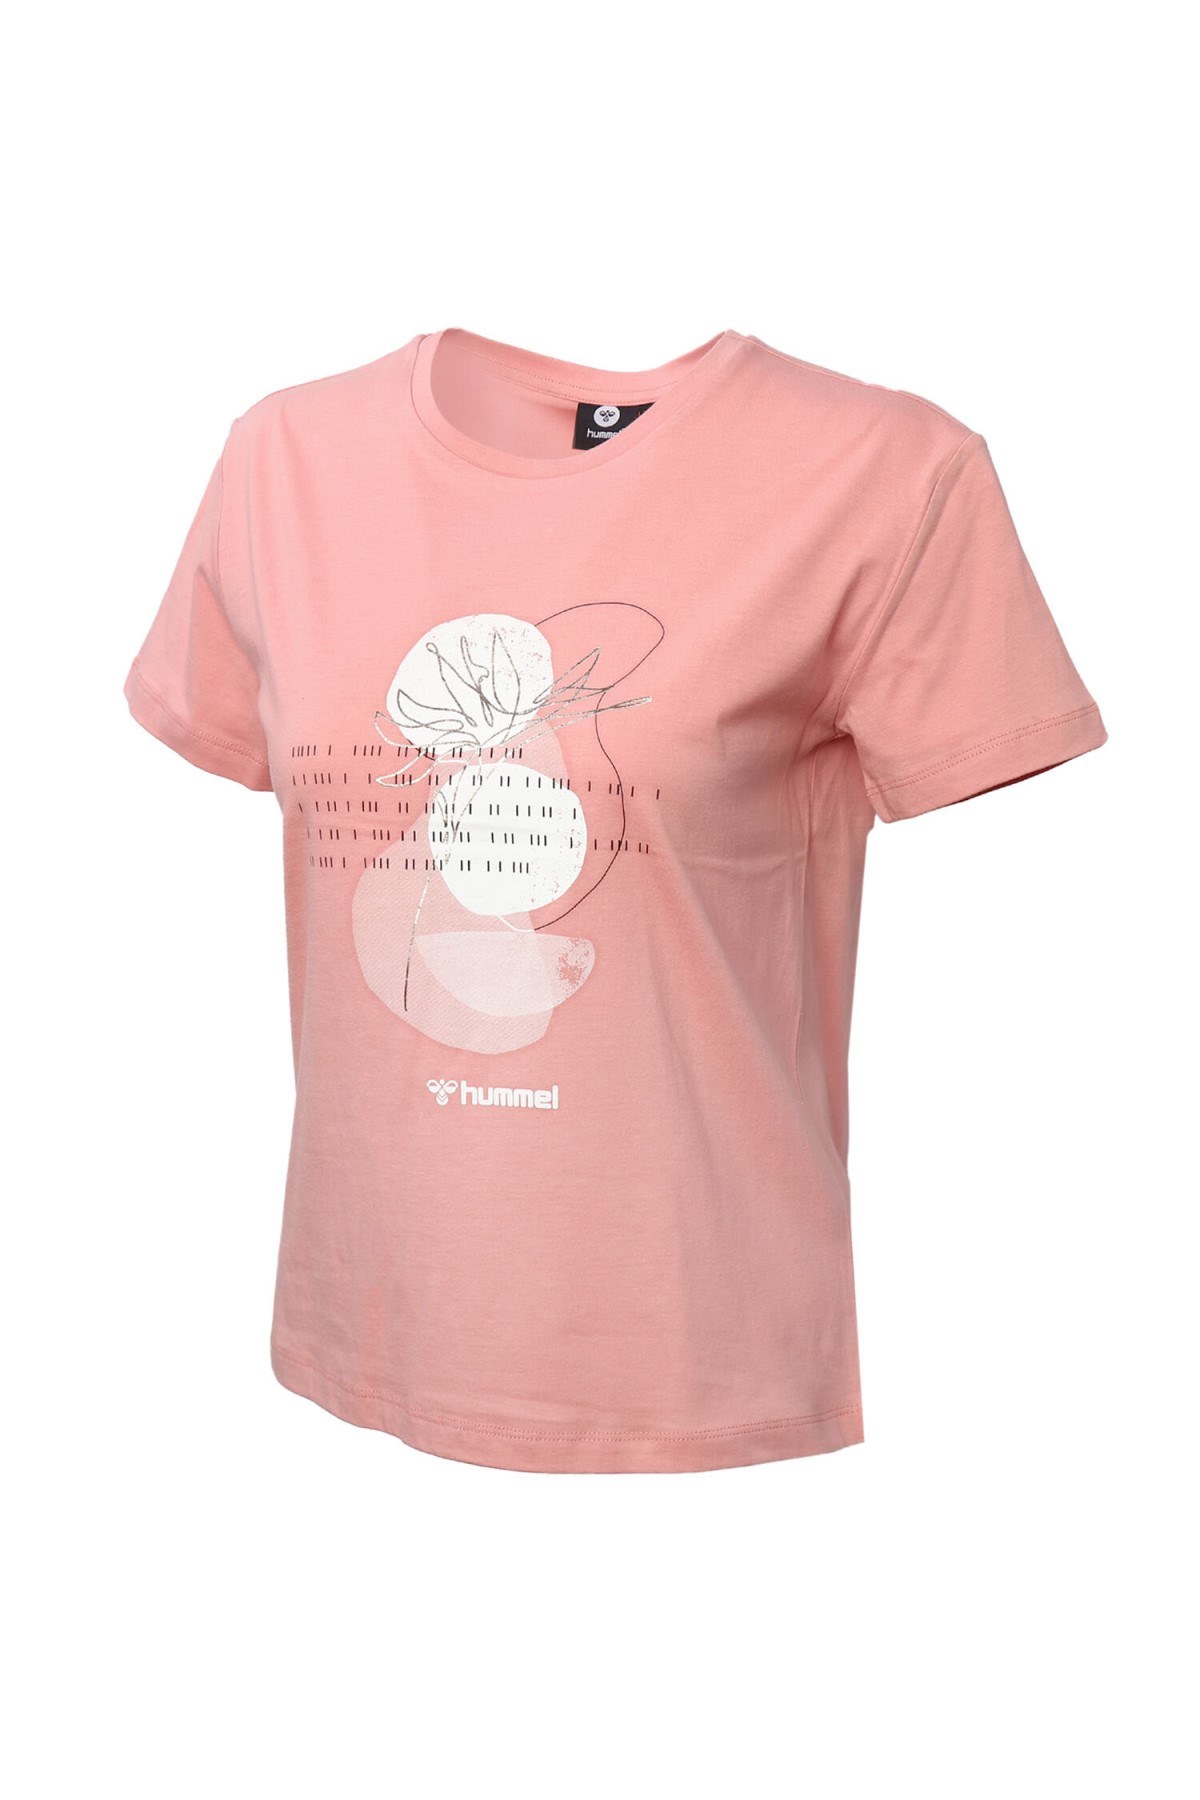 Hummel Kadın T-Shirt 911549-2098 Pınk Amethyst